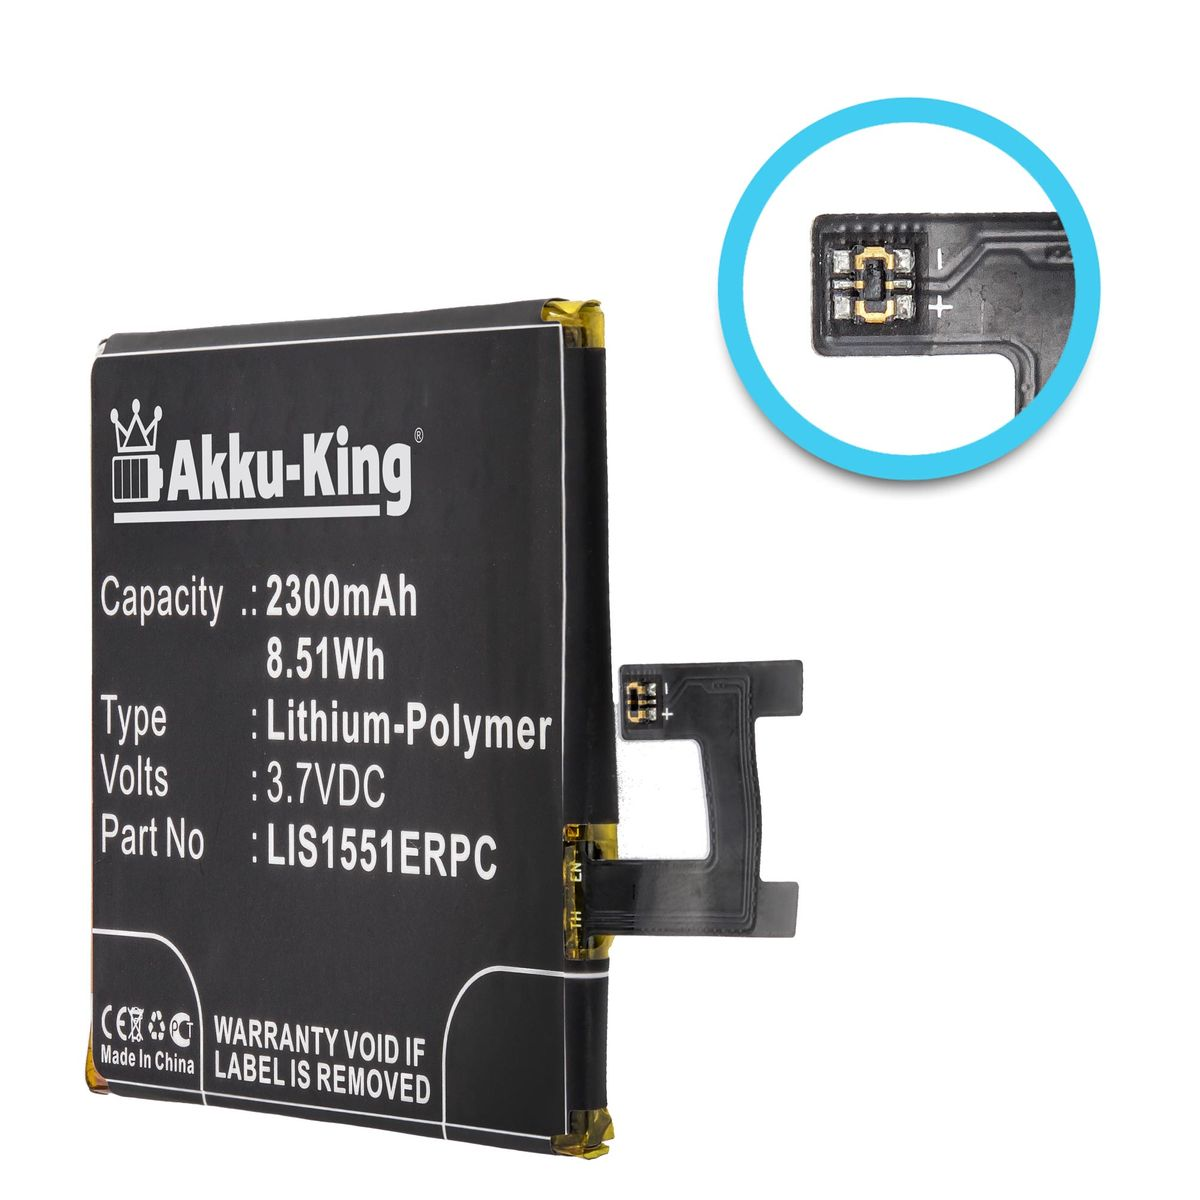 AKKU-KING Akku Handy-Akku, Sony 2300mAh Li-Polymer kompatibel mit Volt, 3.7 LIS1551ERPC